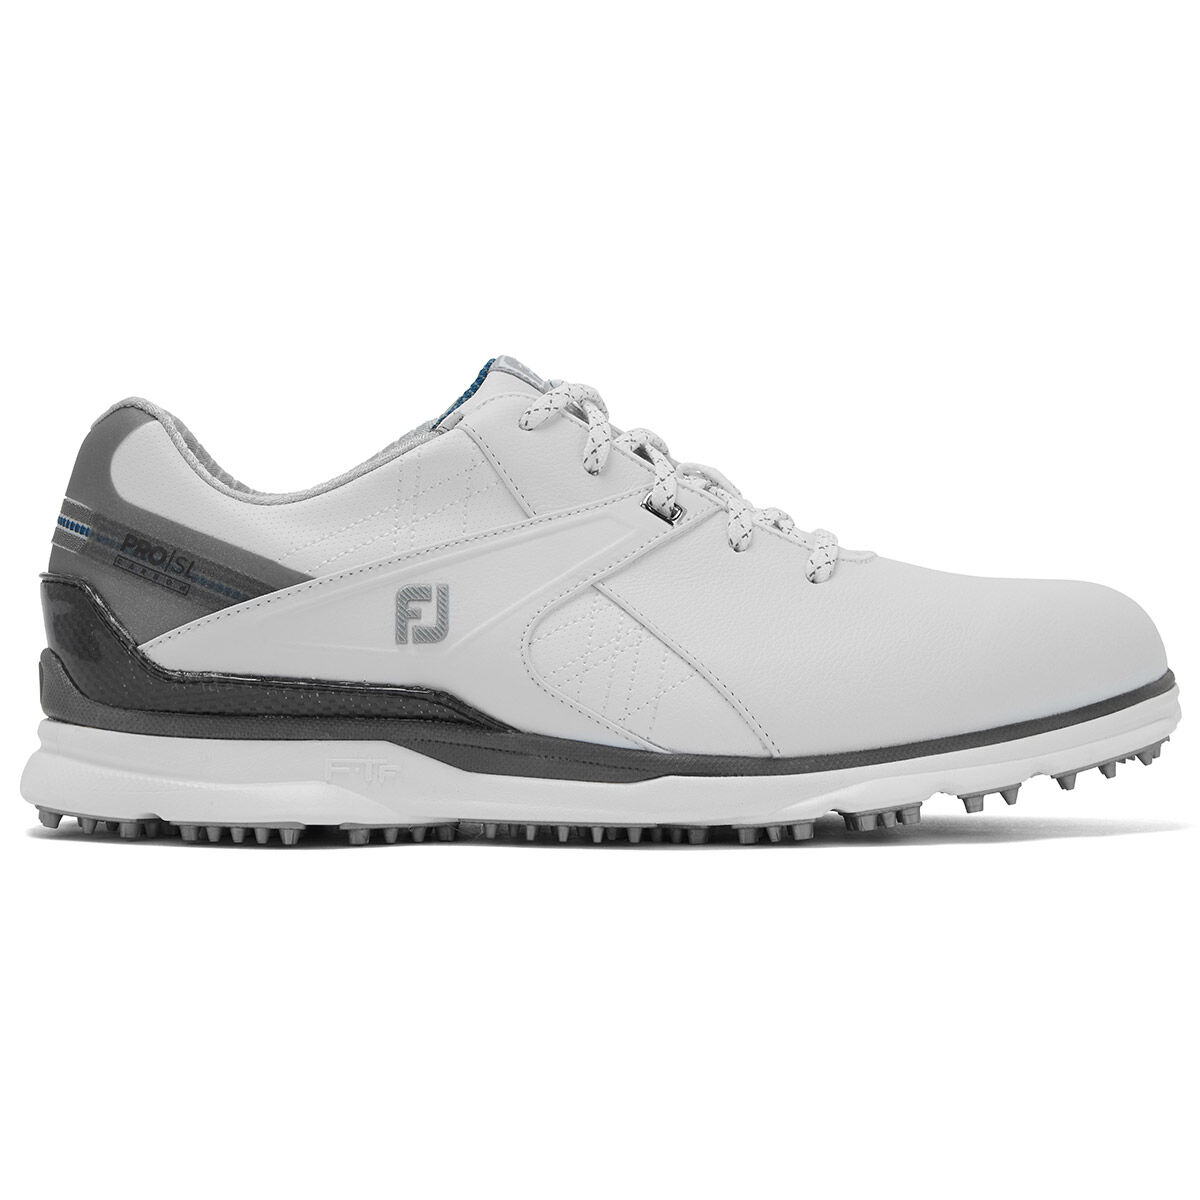 american golf cipő footjoy online shop 